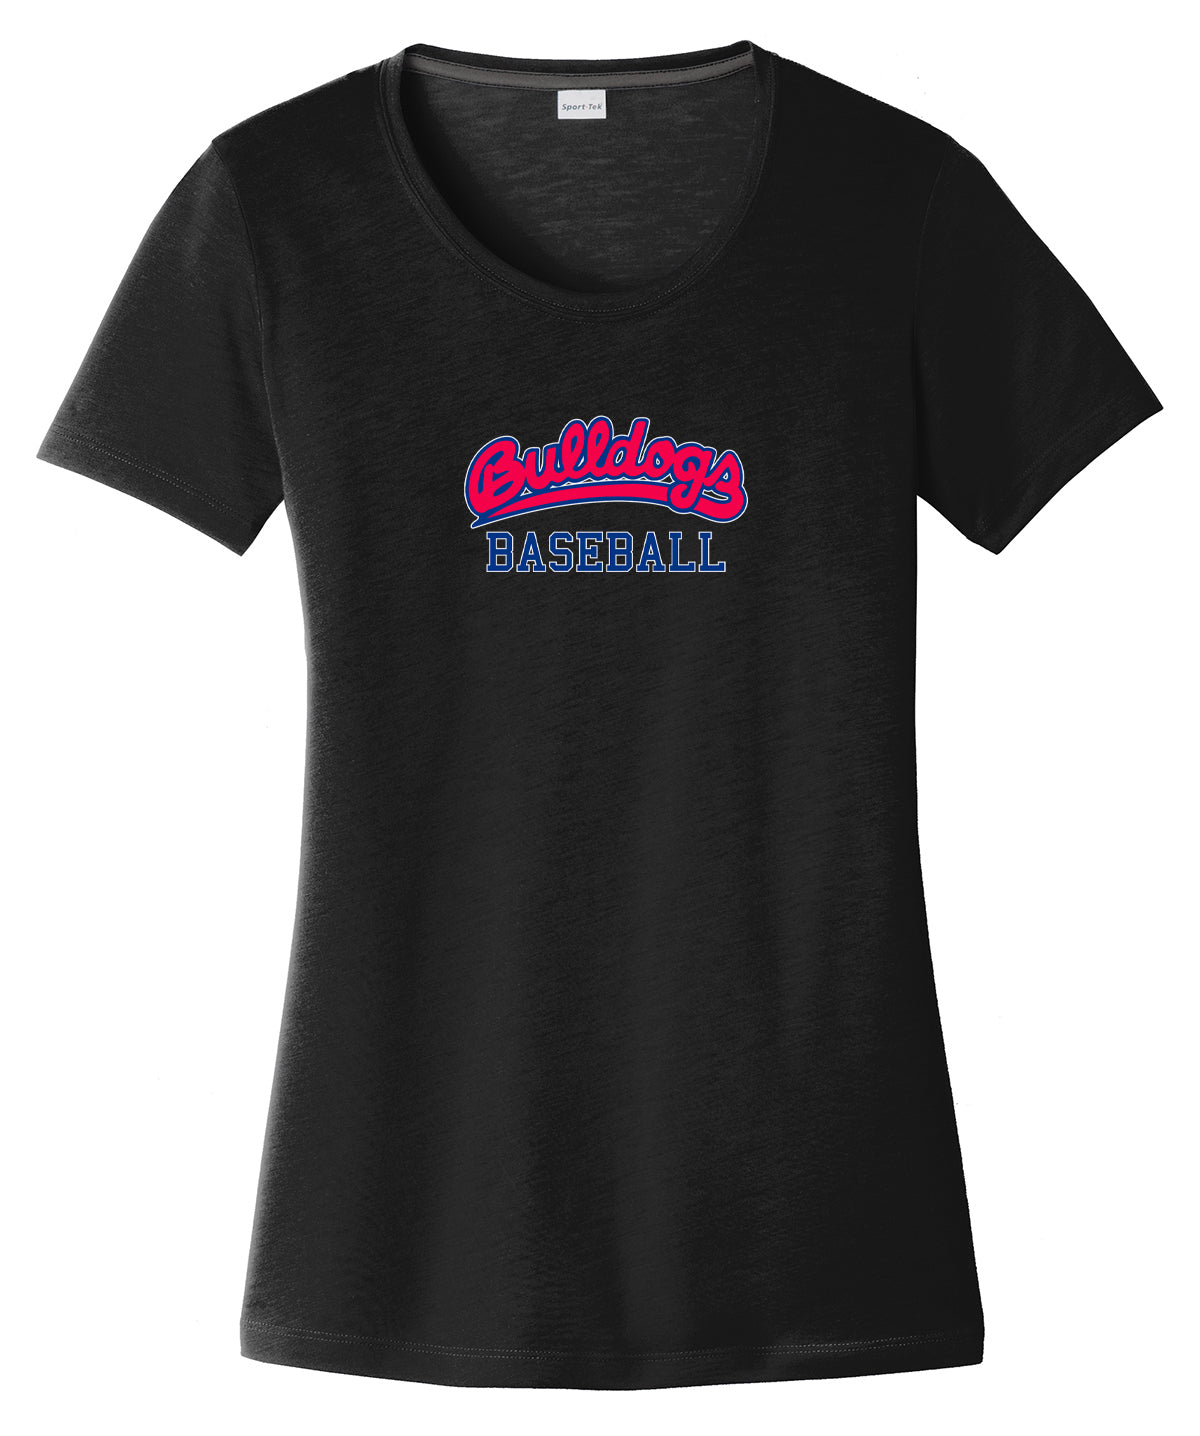 Michigan Bulldogs Baseball Women's CottonTouch Performance T-Shirt